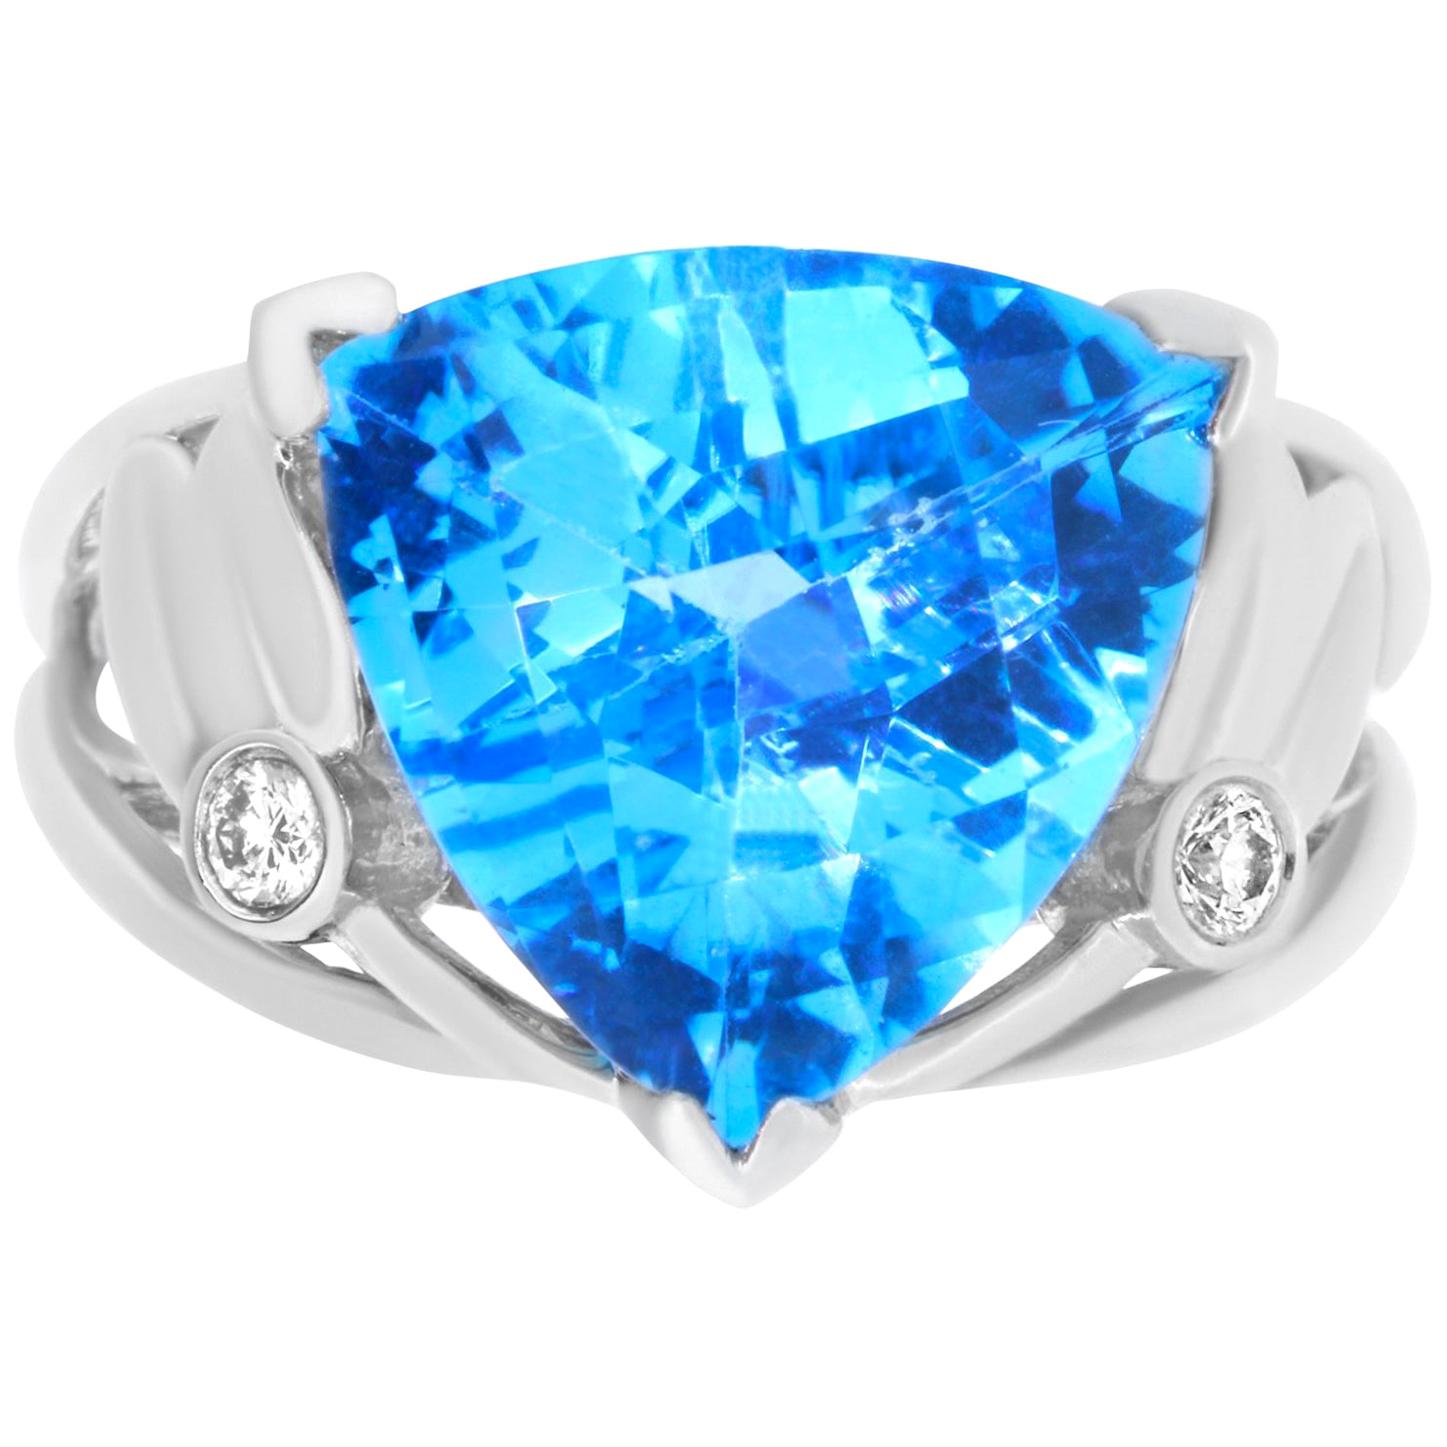 5.71 Carat Trillion Blue Topaz and Diamond Ring